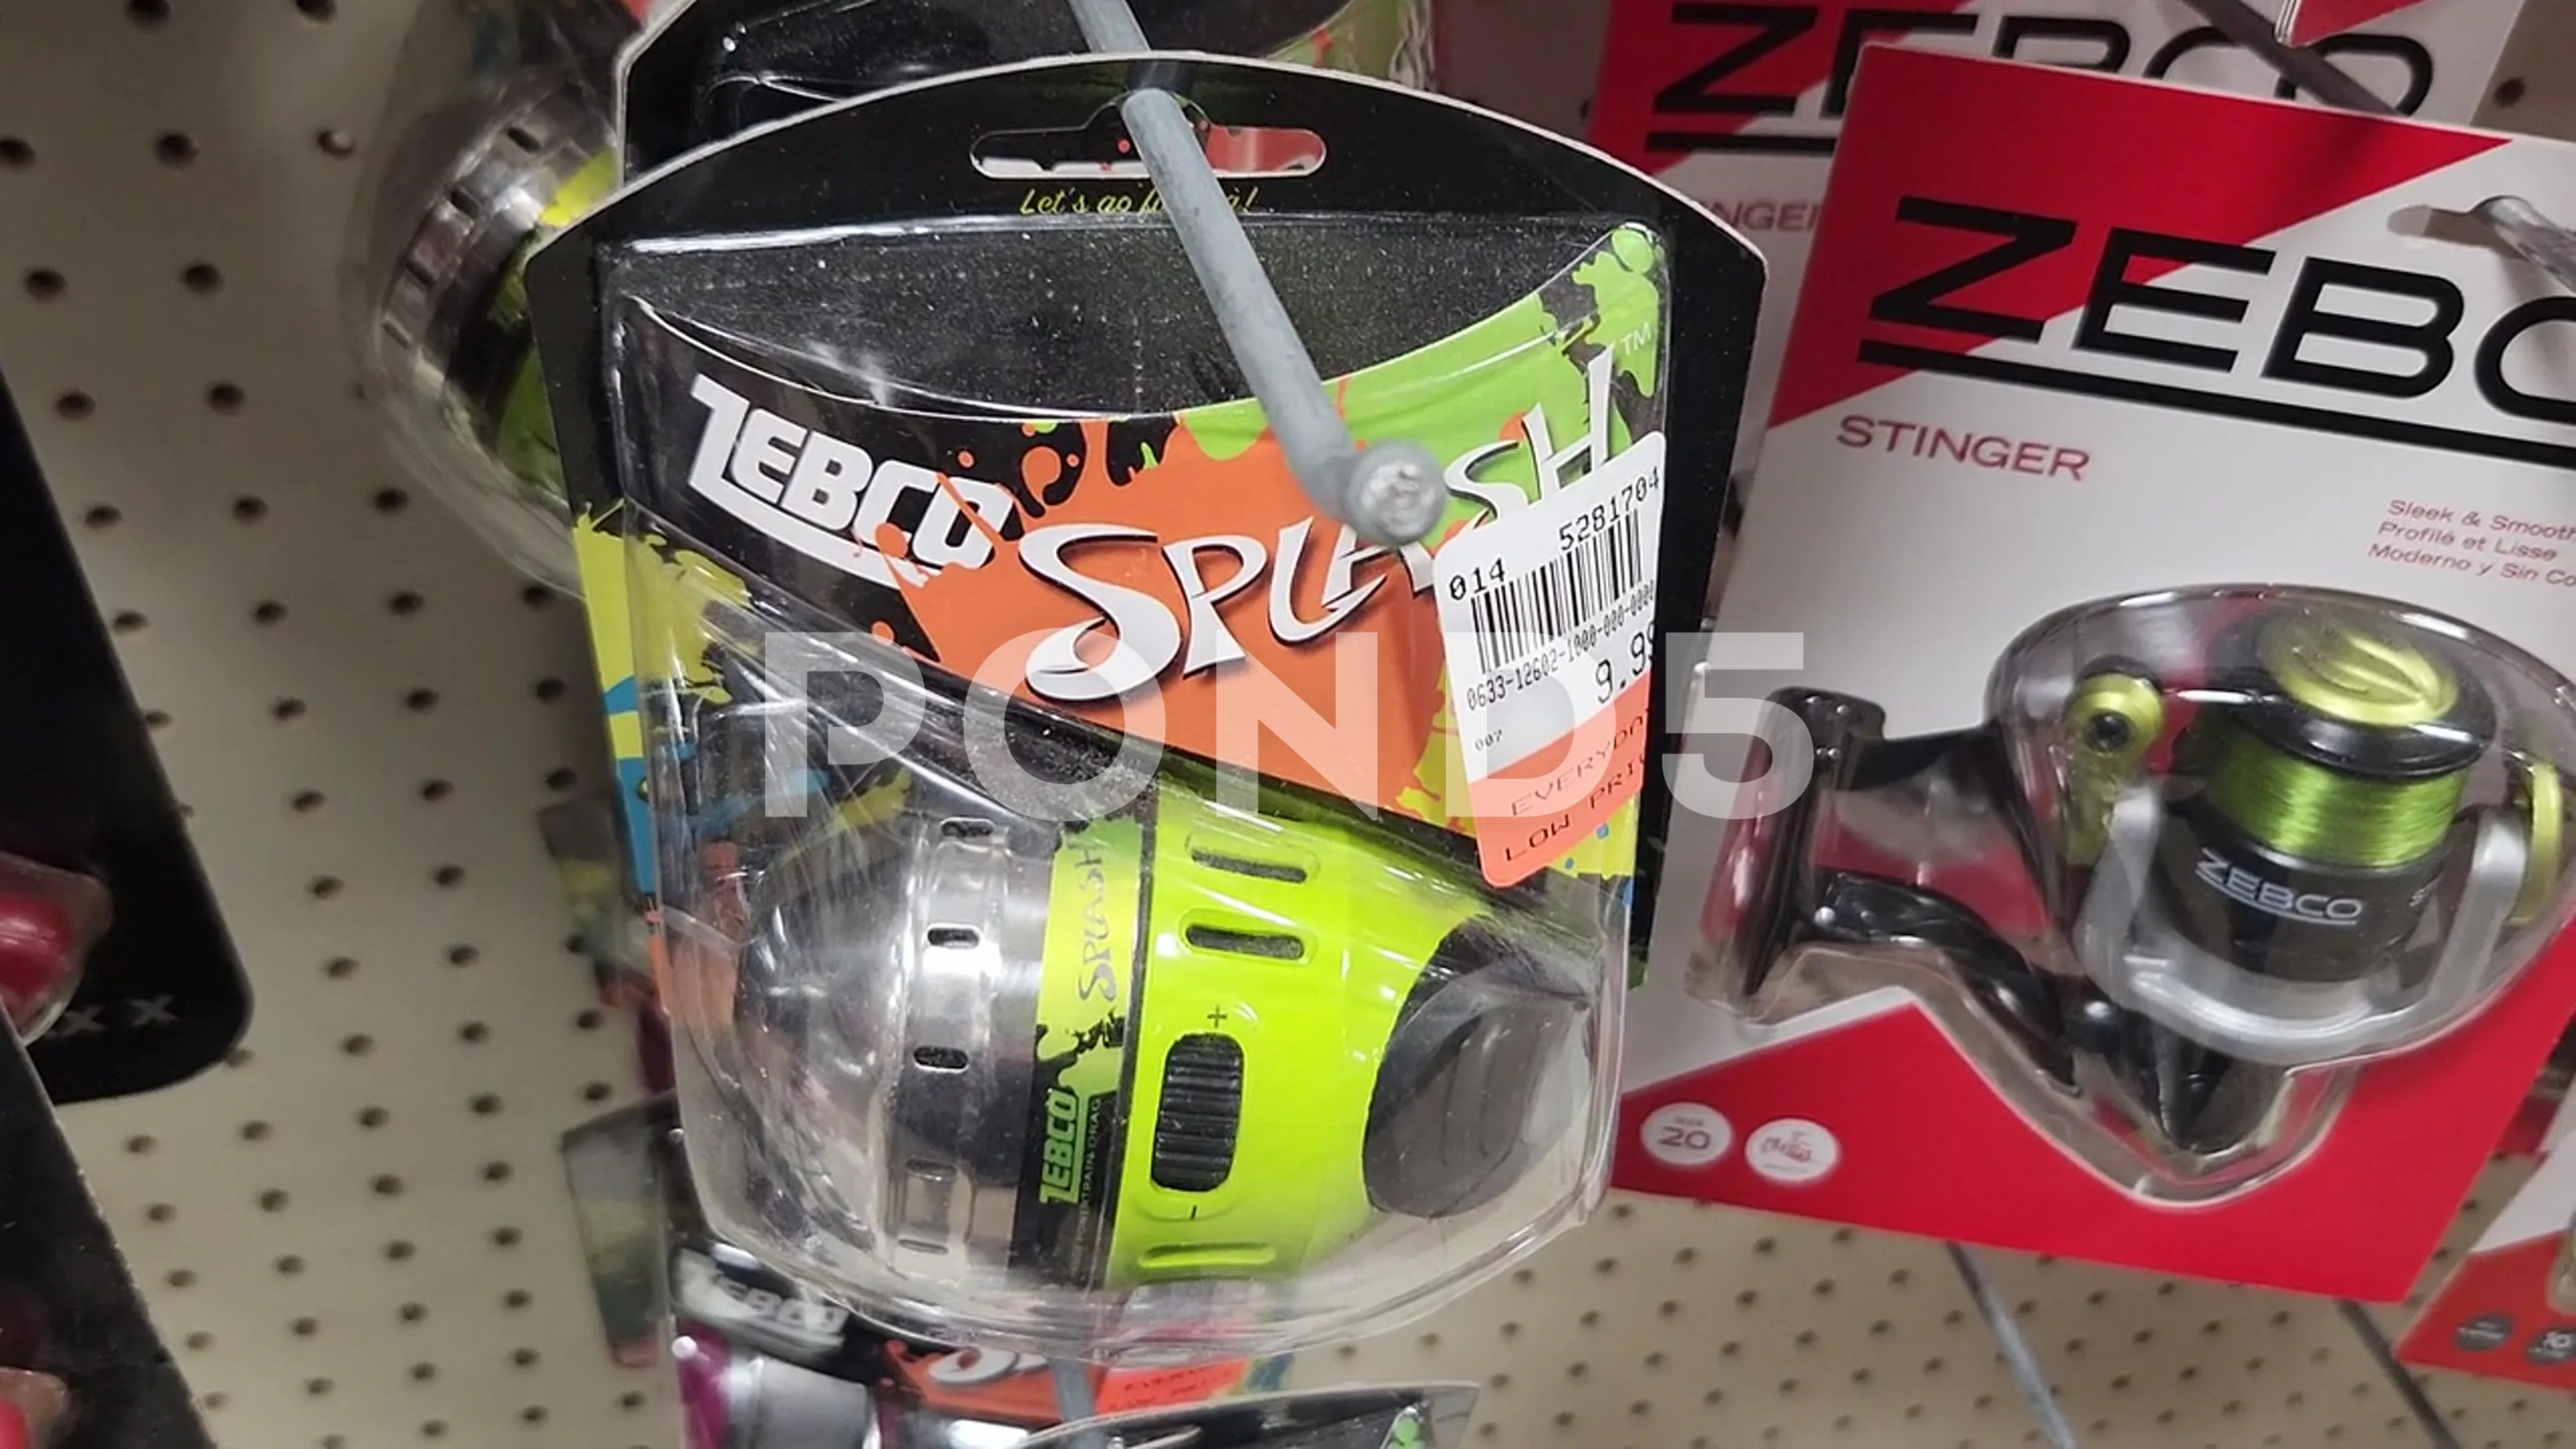 Zebco Splash Fishing Rod Retailer, Stock Video